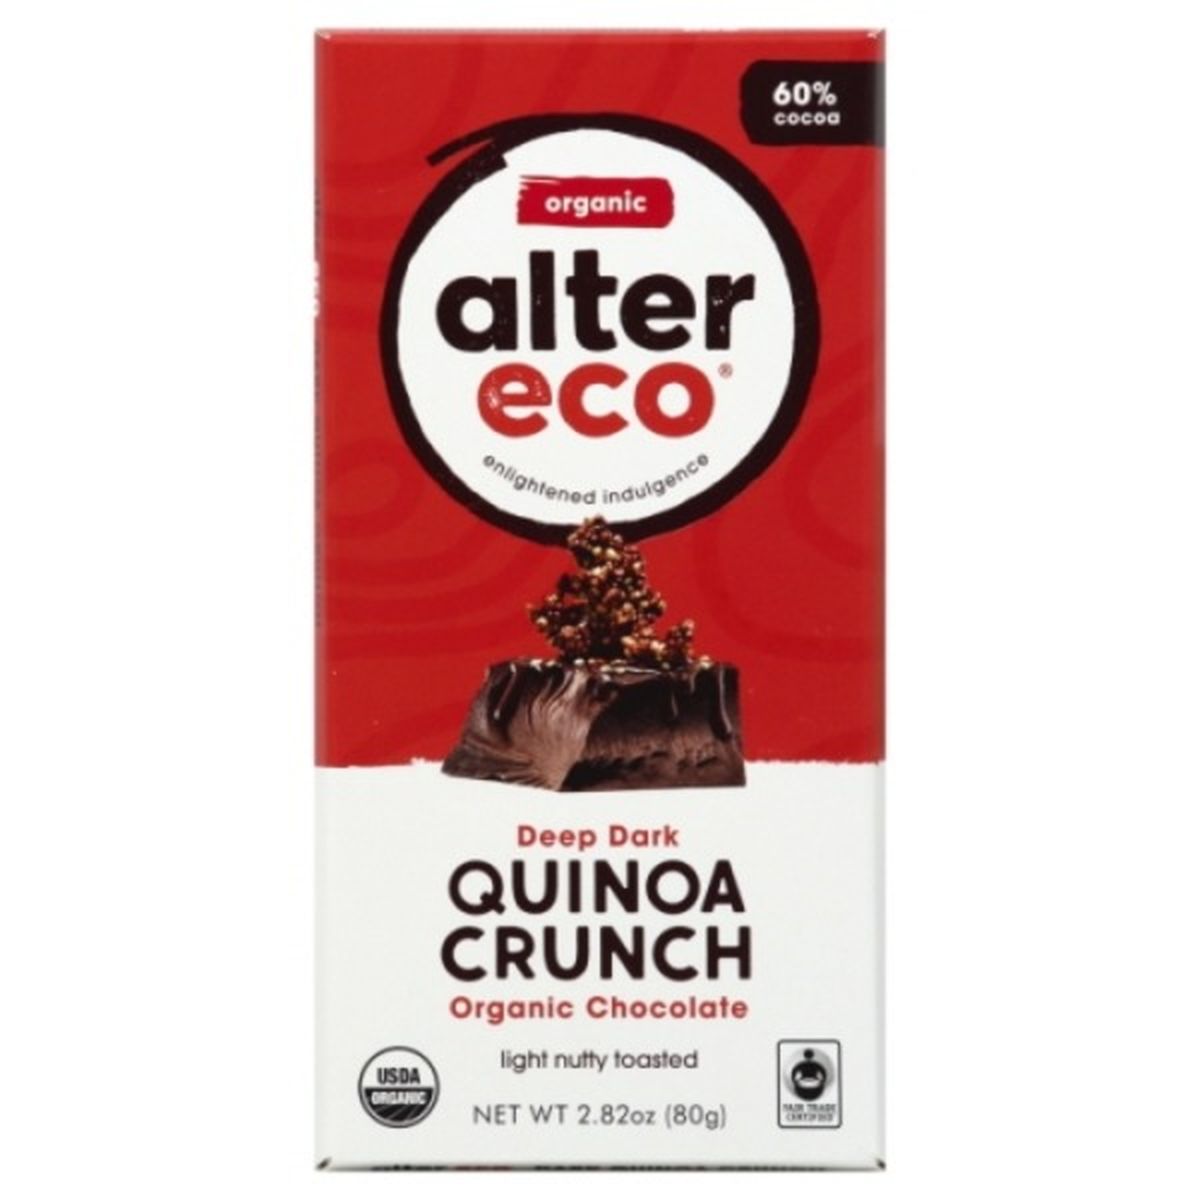 Calories in Alter Eco Dark Chocolate, Organic, Deep Dark Quinoa Crunch, 60% Cocoa